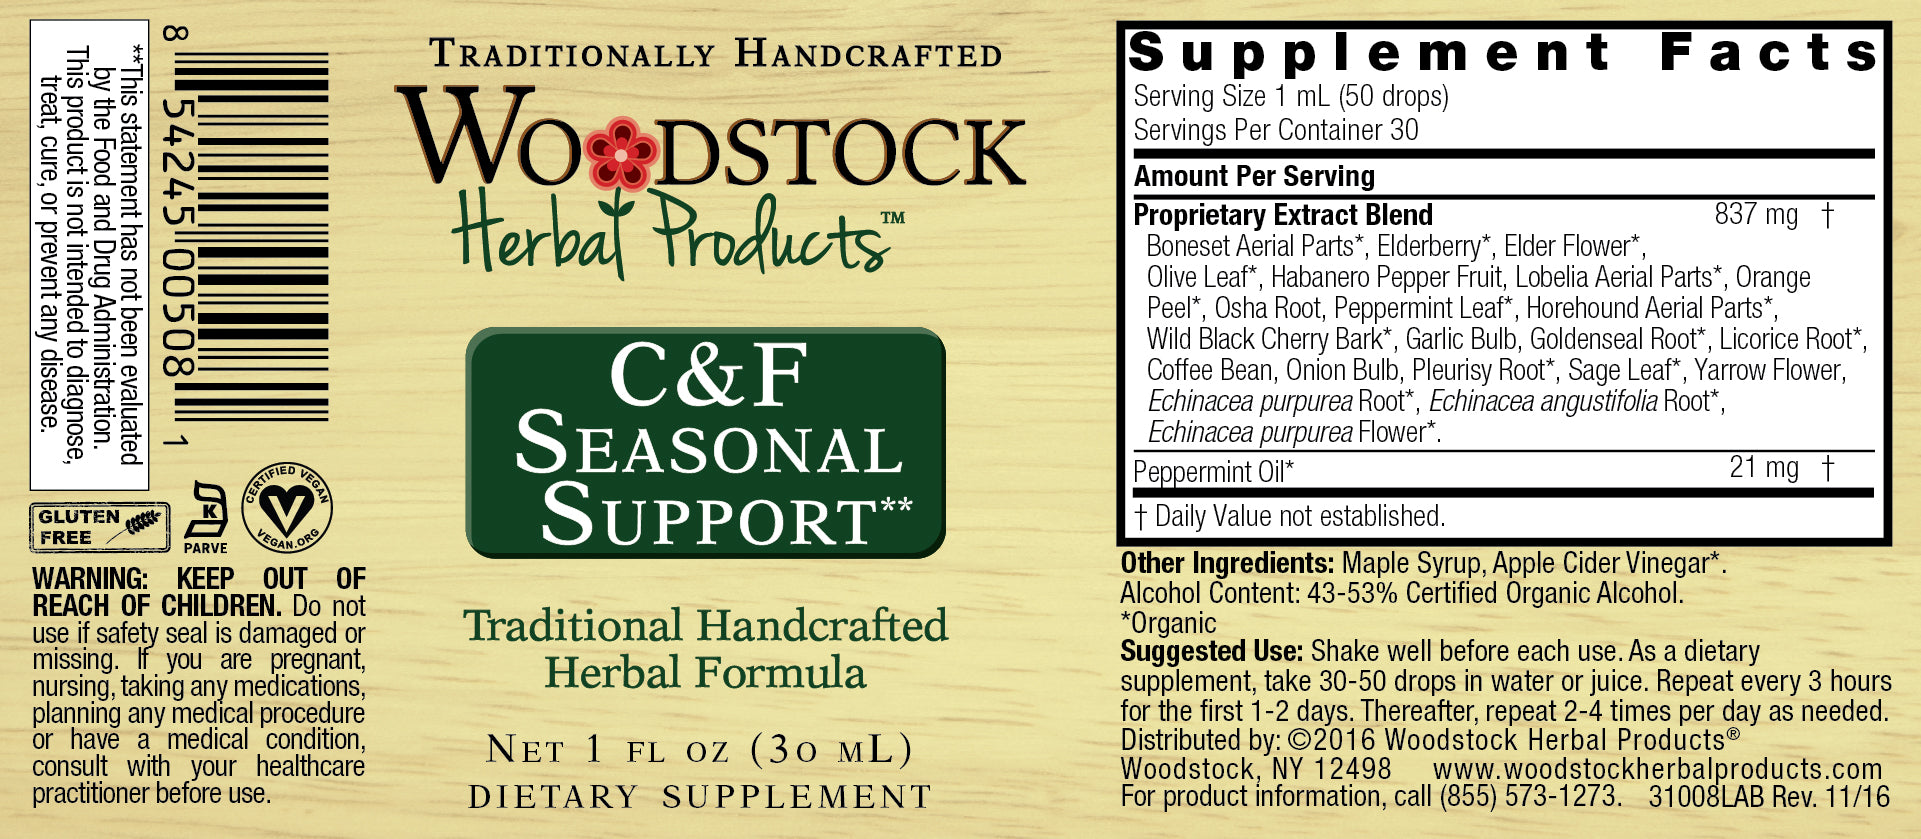 c & f seasonal support woodstock